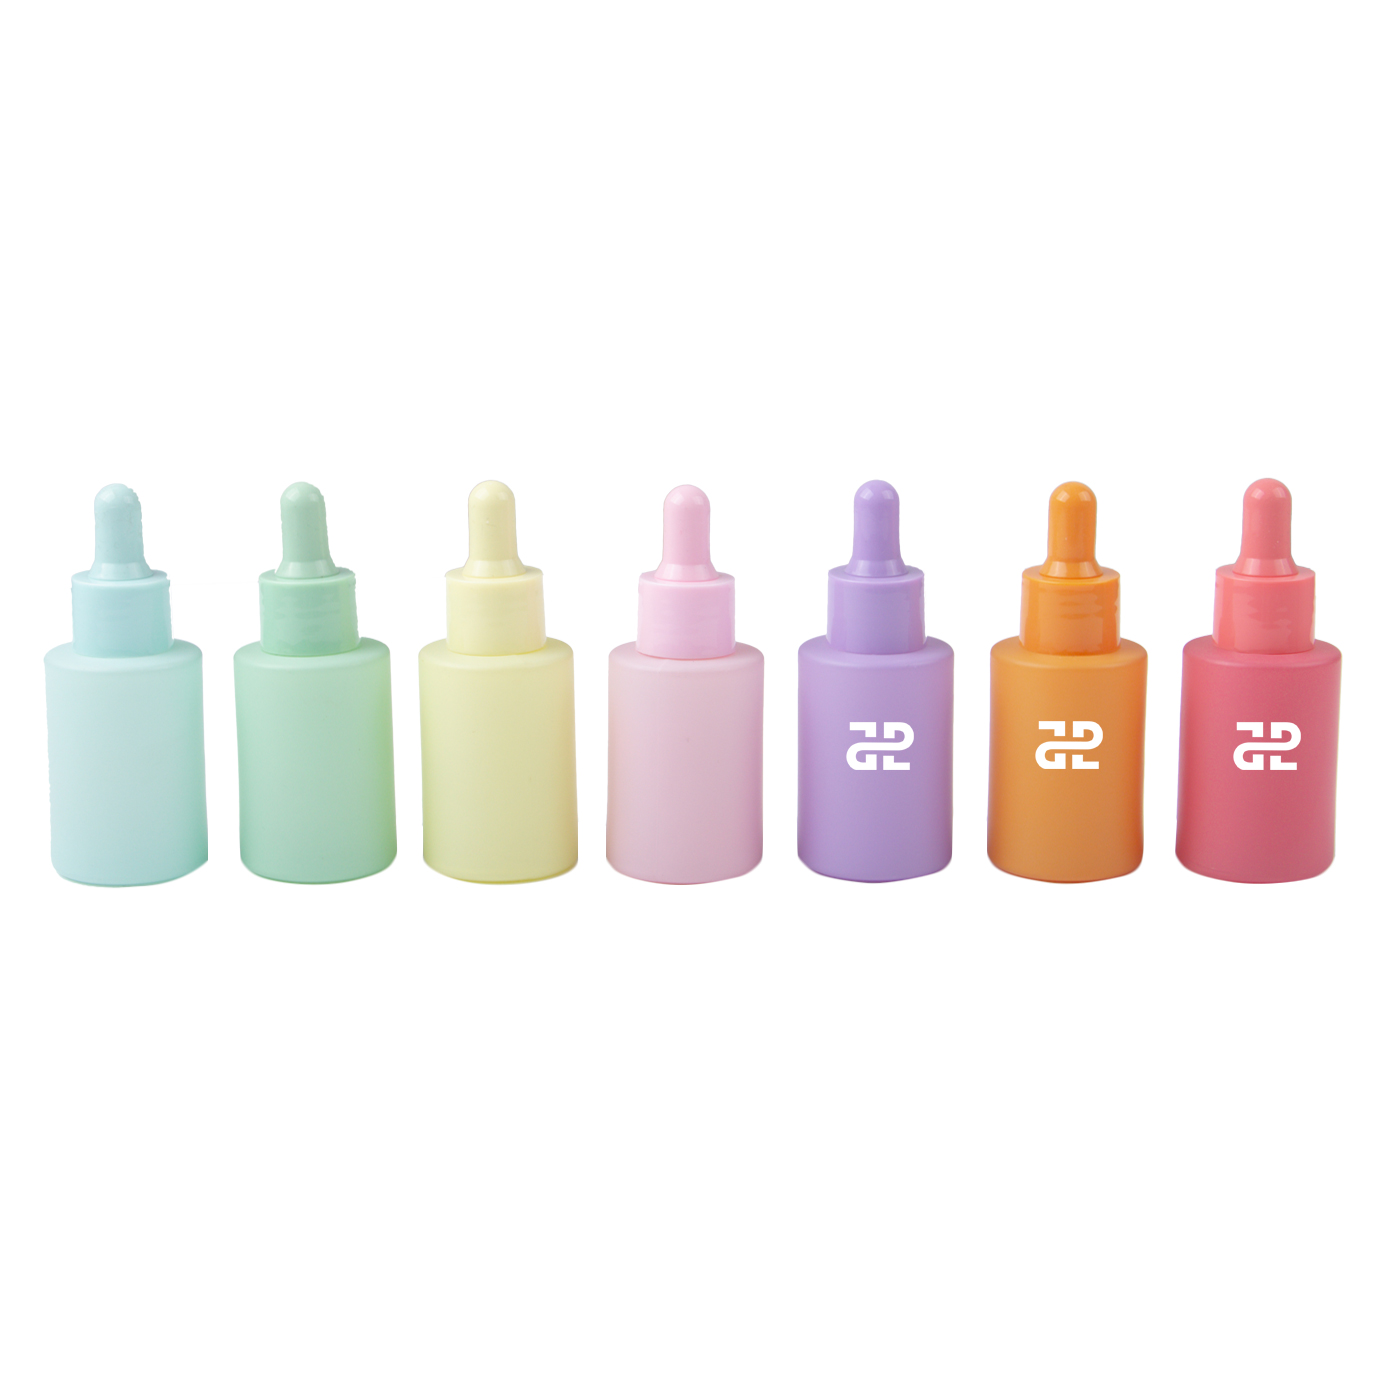 1 oz. Colorful Glass Dropper Bottle